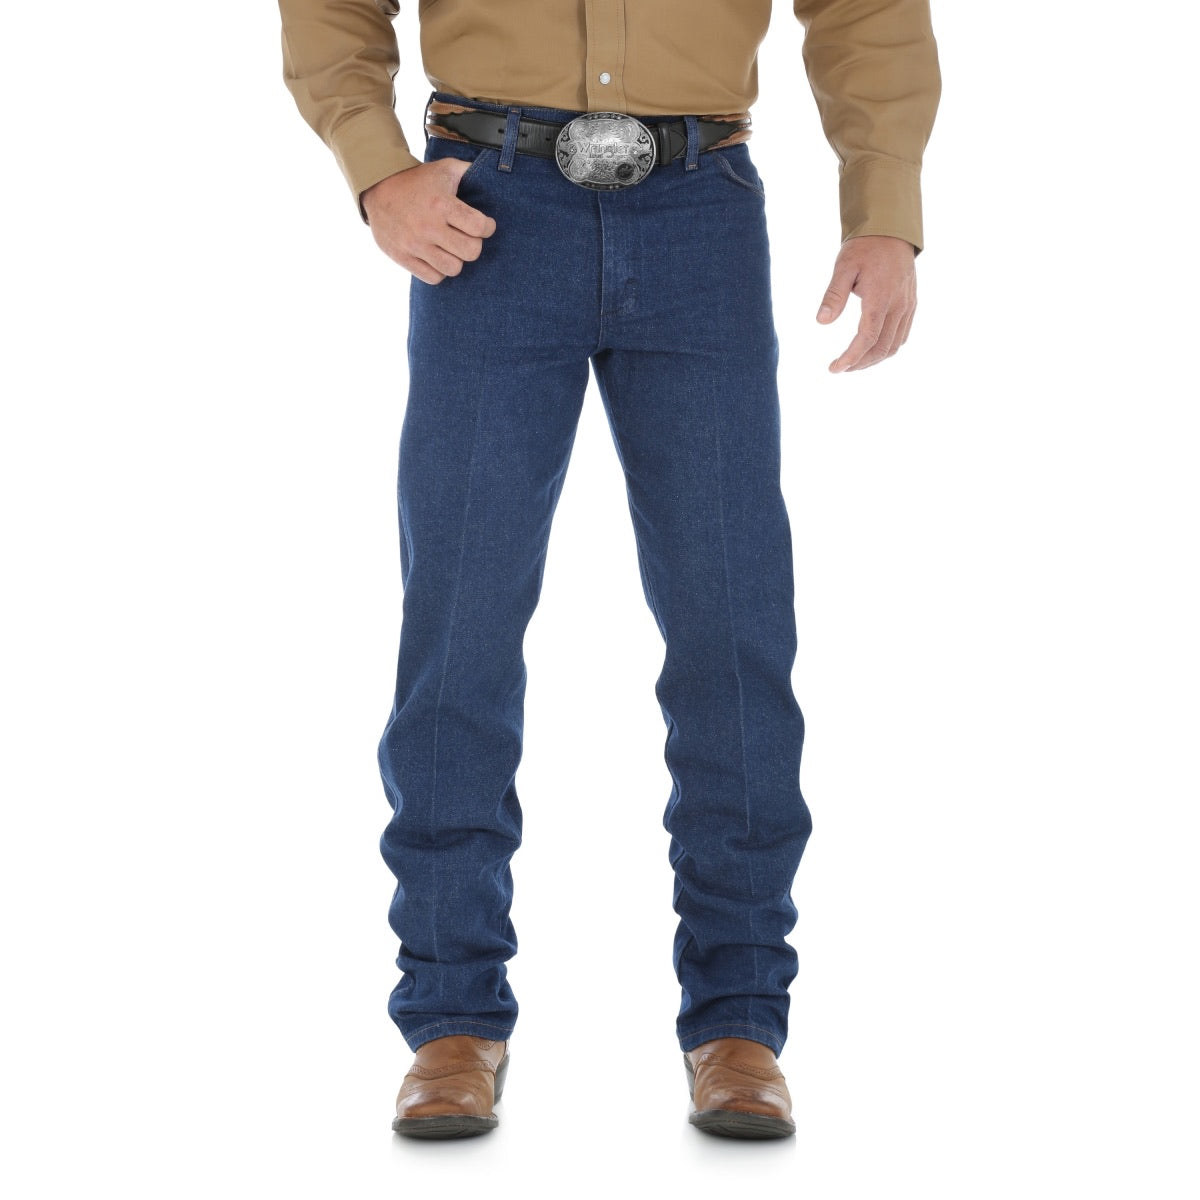 Wrangler® Cowboy Cut® Original Fit 13 Jean in Prewashed Indigo